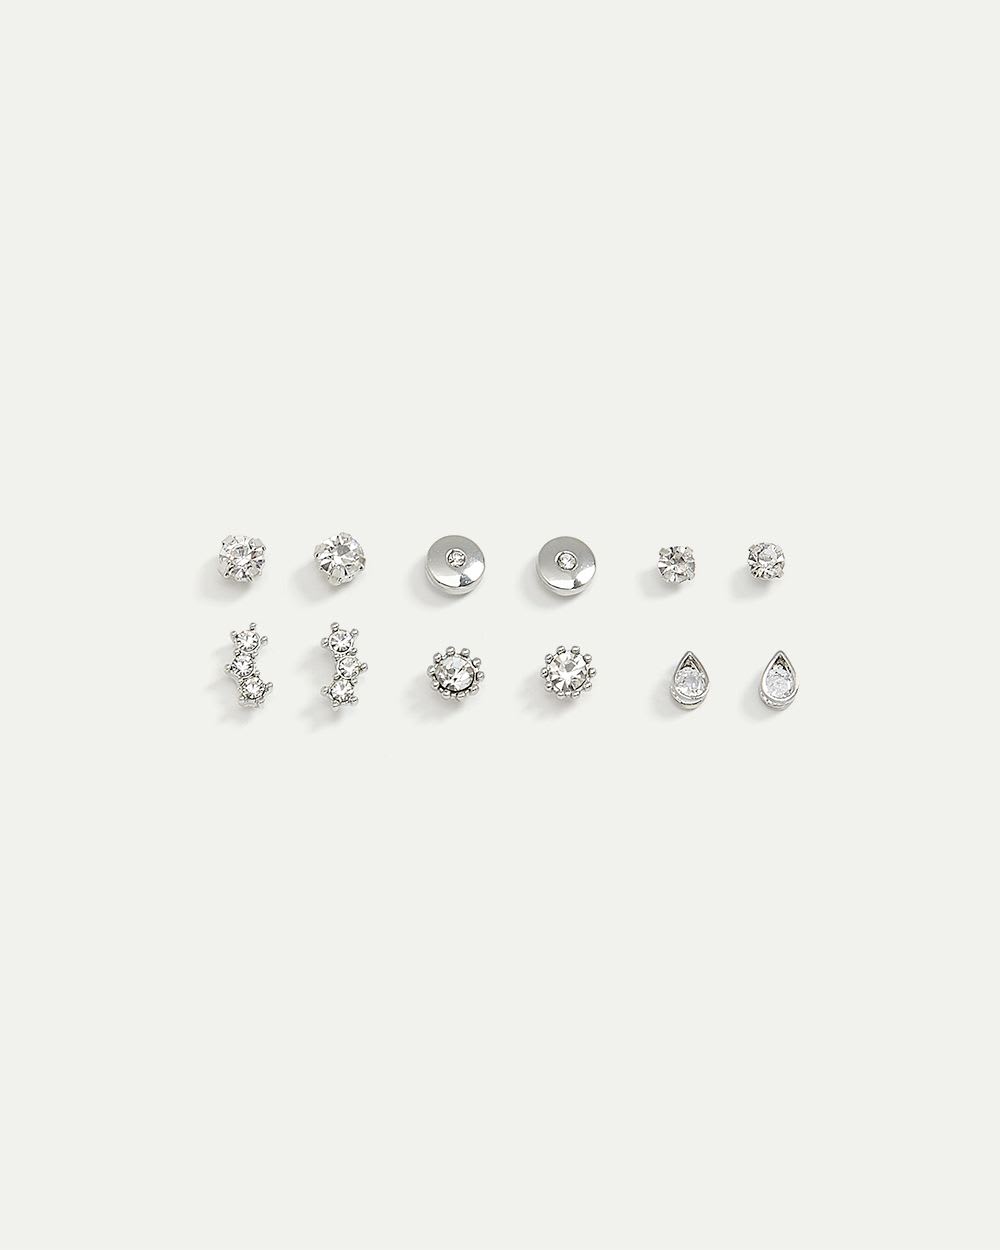 Assorted Rhinestone Stud Earrings - Set of 6